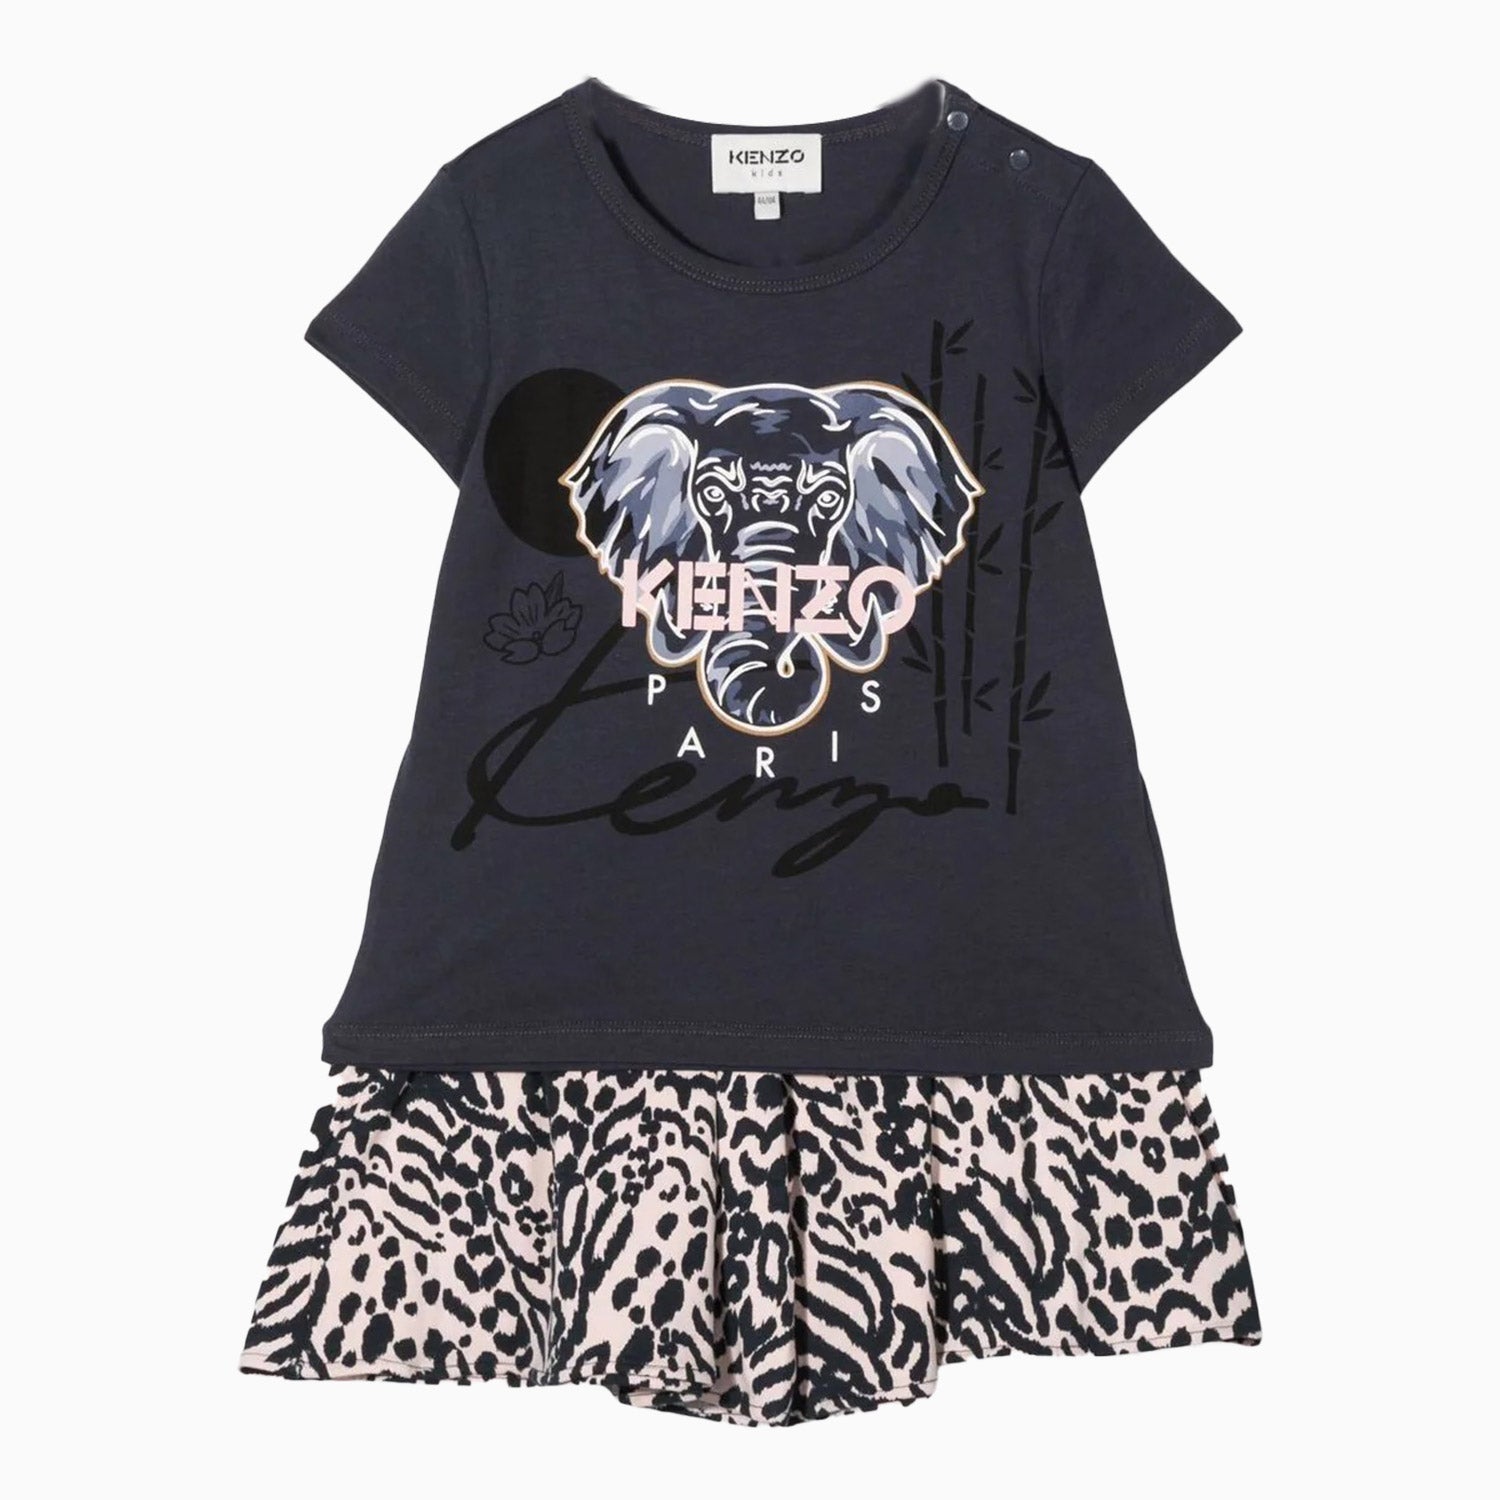 kenzo-kids-animal-print-outfit-toddlers-k08037-471